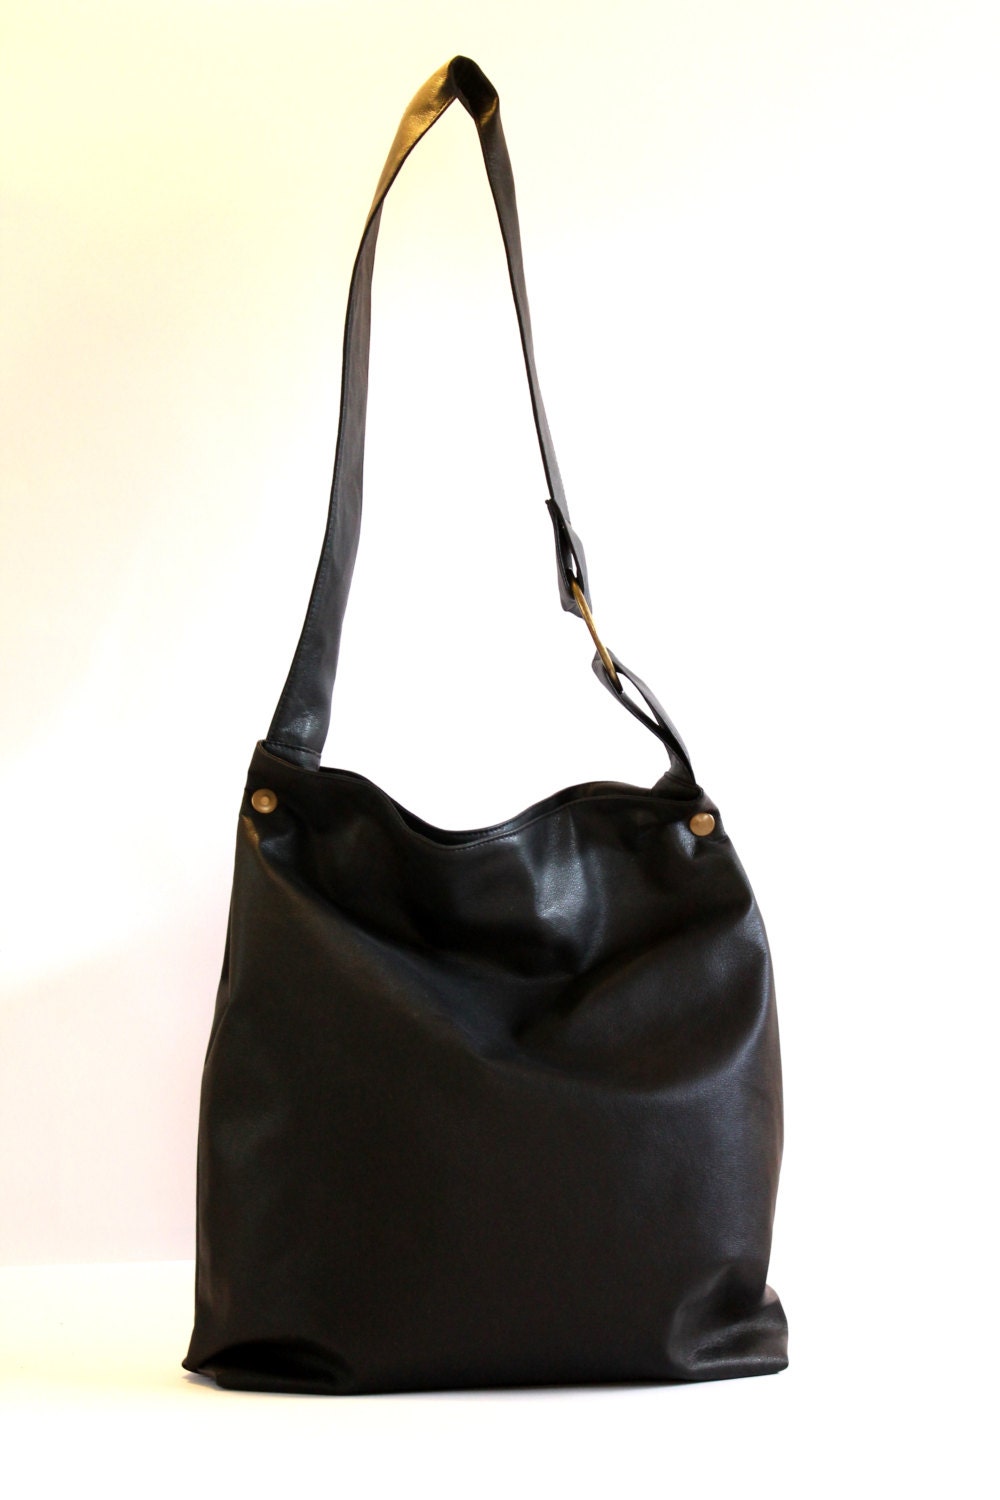 Black Hobo Bag Vegan Bag Crossbody Hobo Bag Casual by TikeStudio